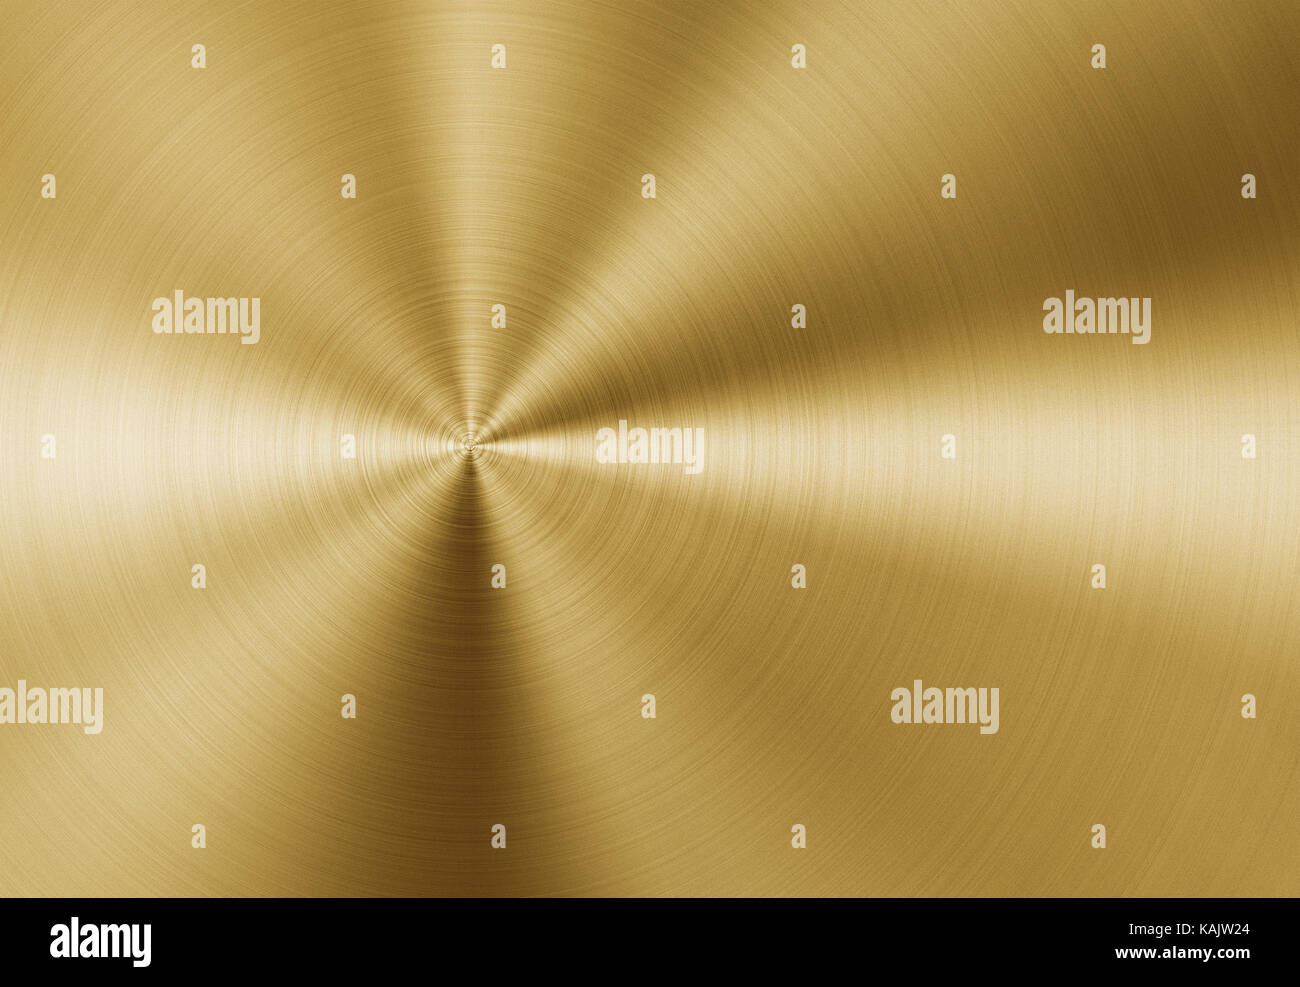 Shiny circular golden metal background Stock Photo